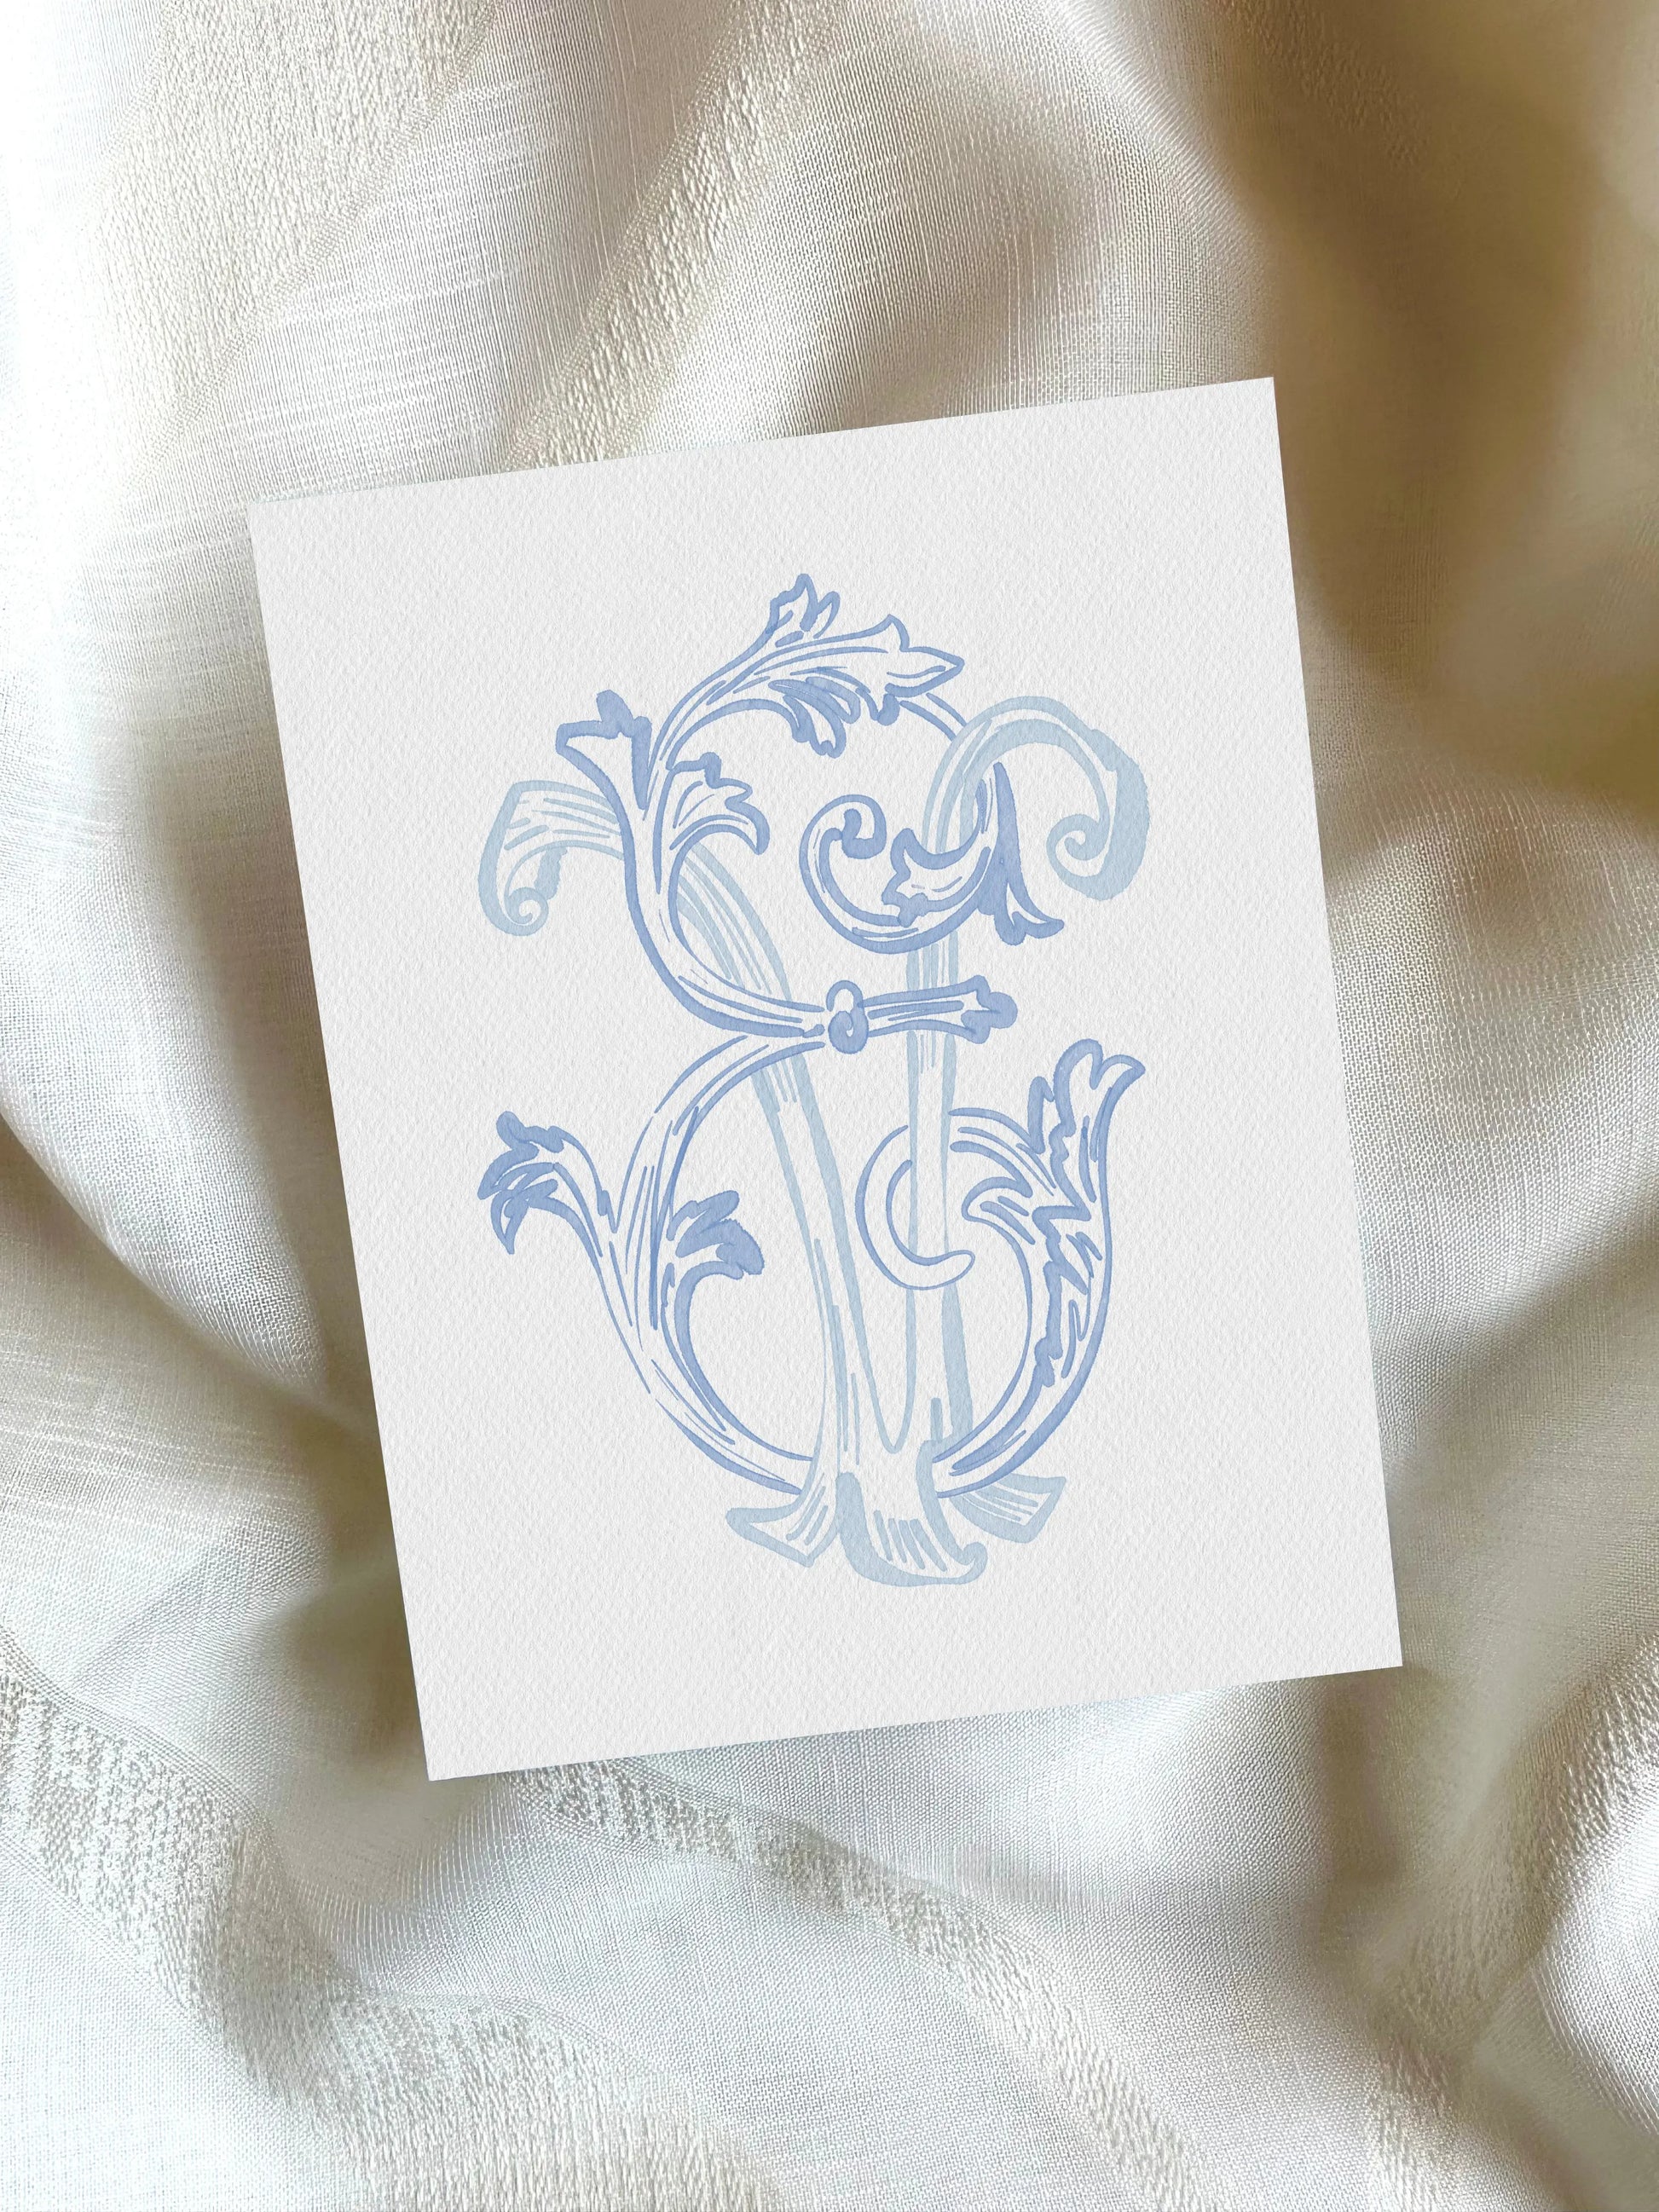 2 Letter Monogram with Letters VE | Digital Download - Wedding Monogram SVG, Personal Logo, Wedding Logo for Wedding Invitations The Wedding Crest Lab